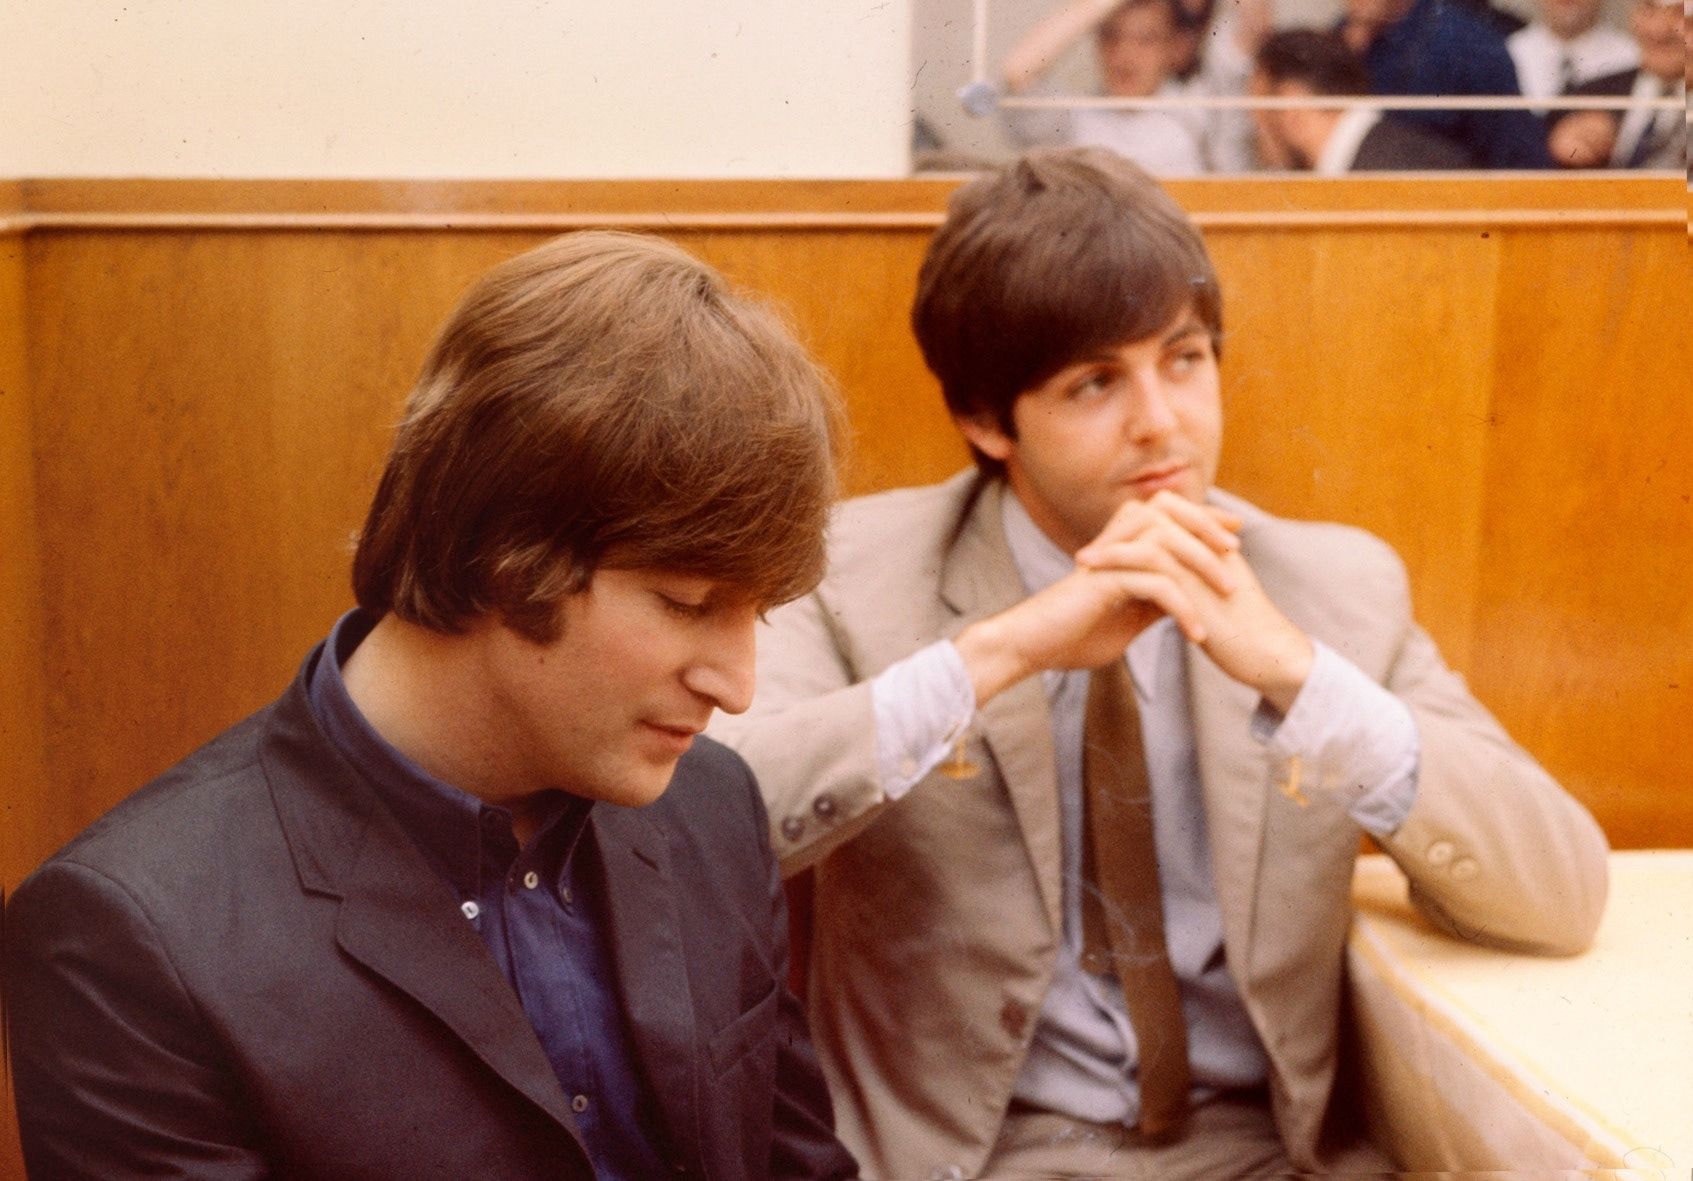 The diplomat and the agitator: How Lennon-McCartney duo broke ‘the lone genius’ myth